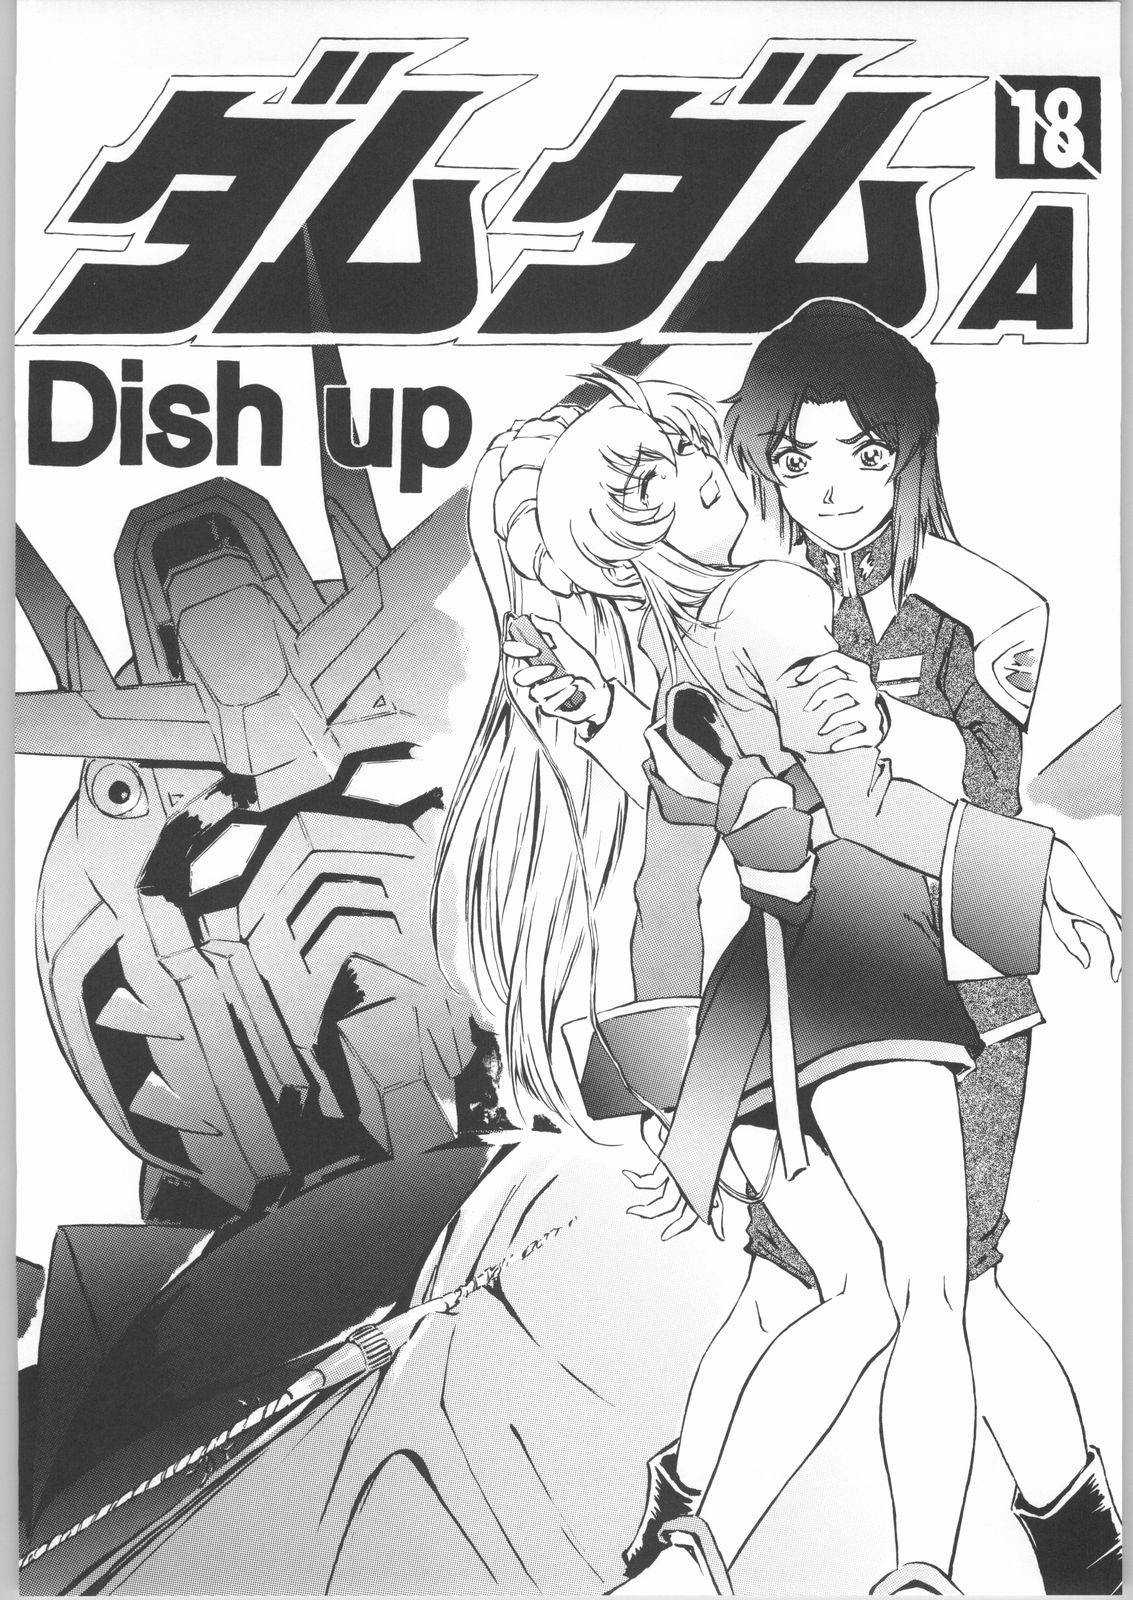 [Dish up] Kekkan Dam Dam A [Gundam Seed] 